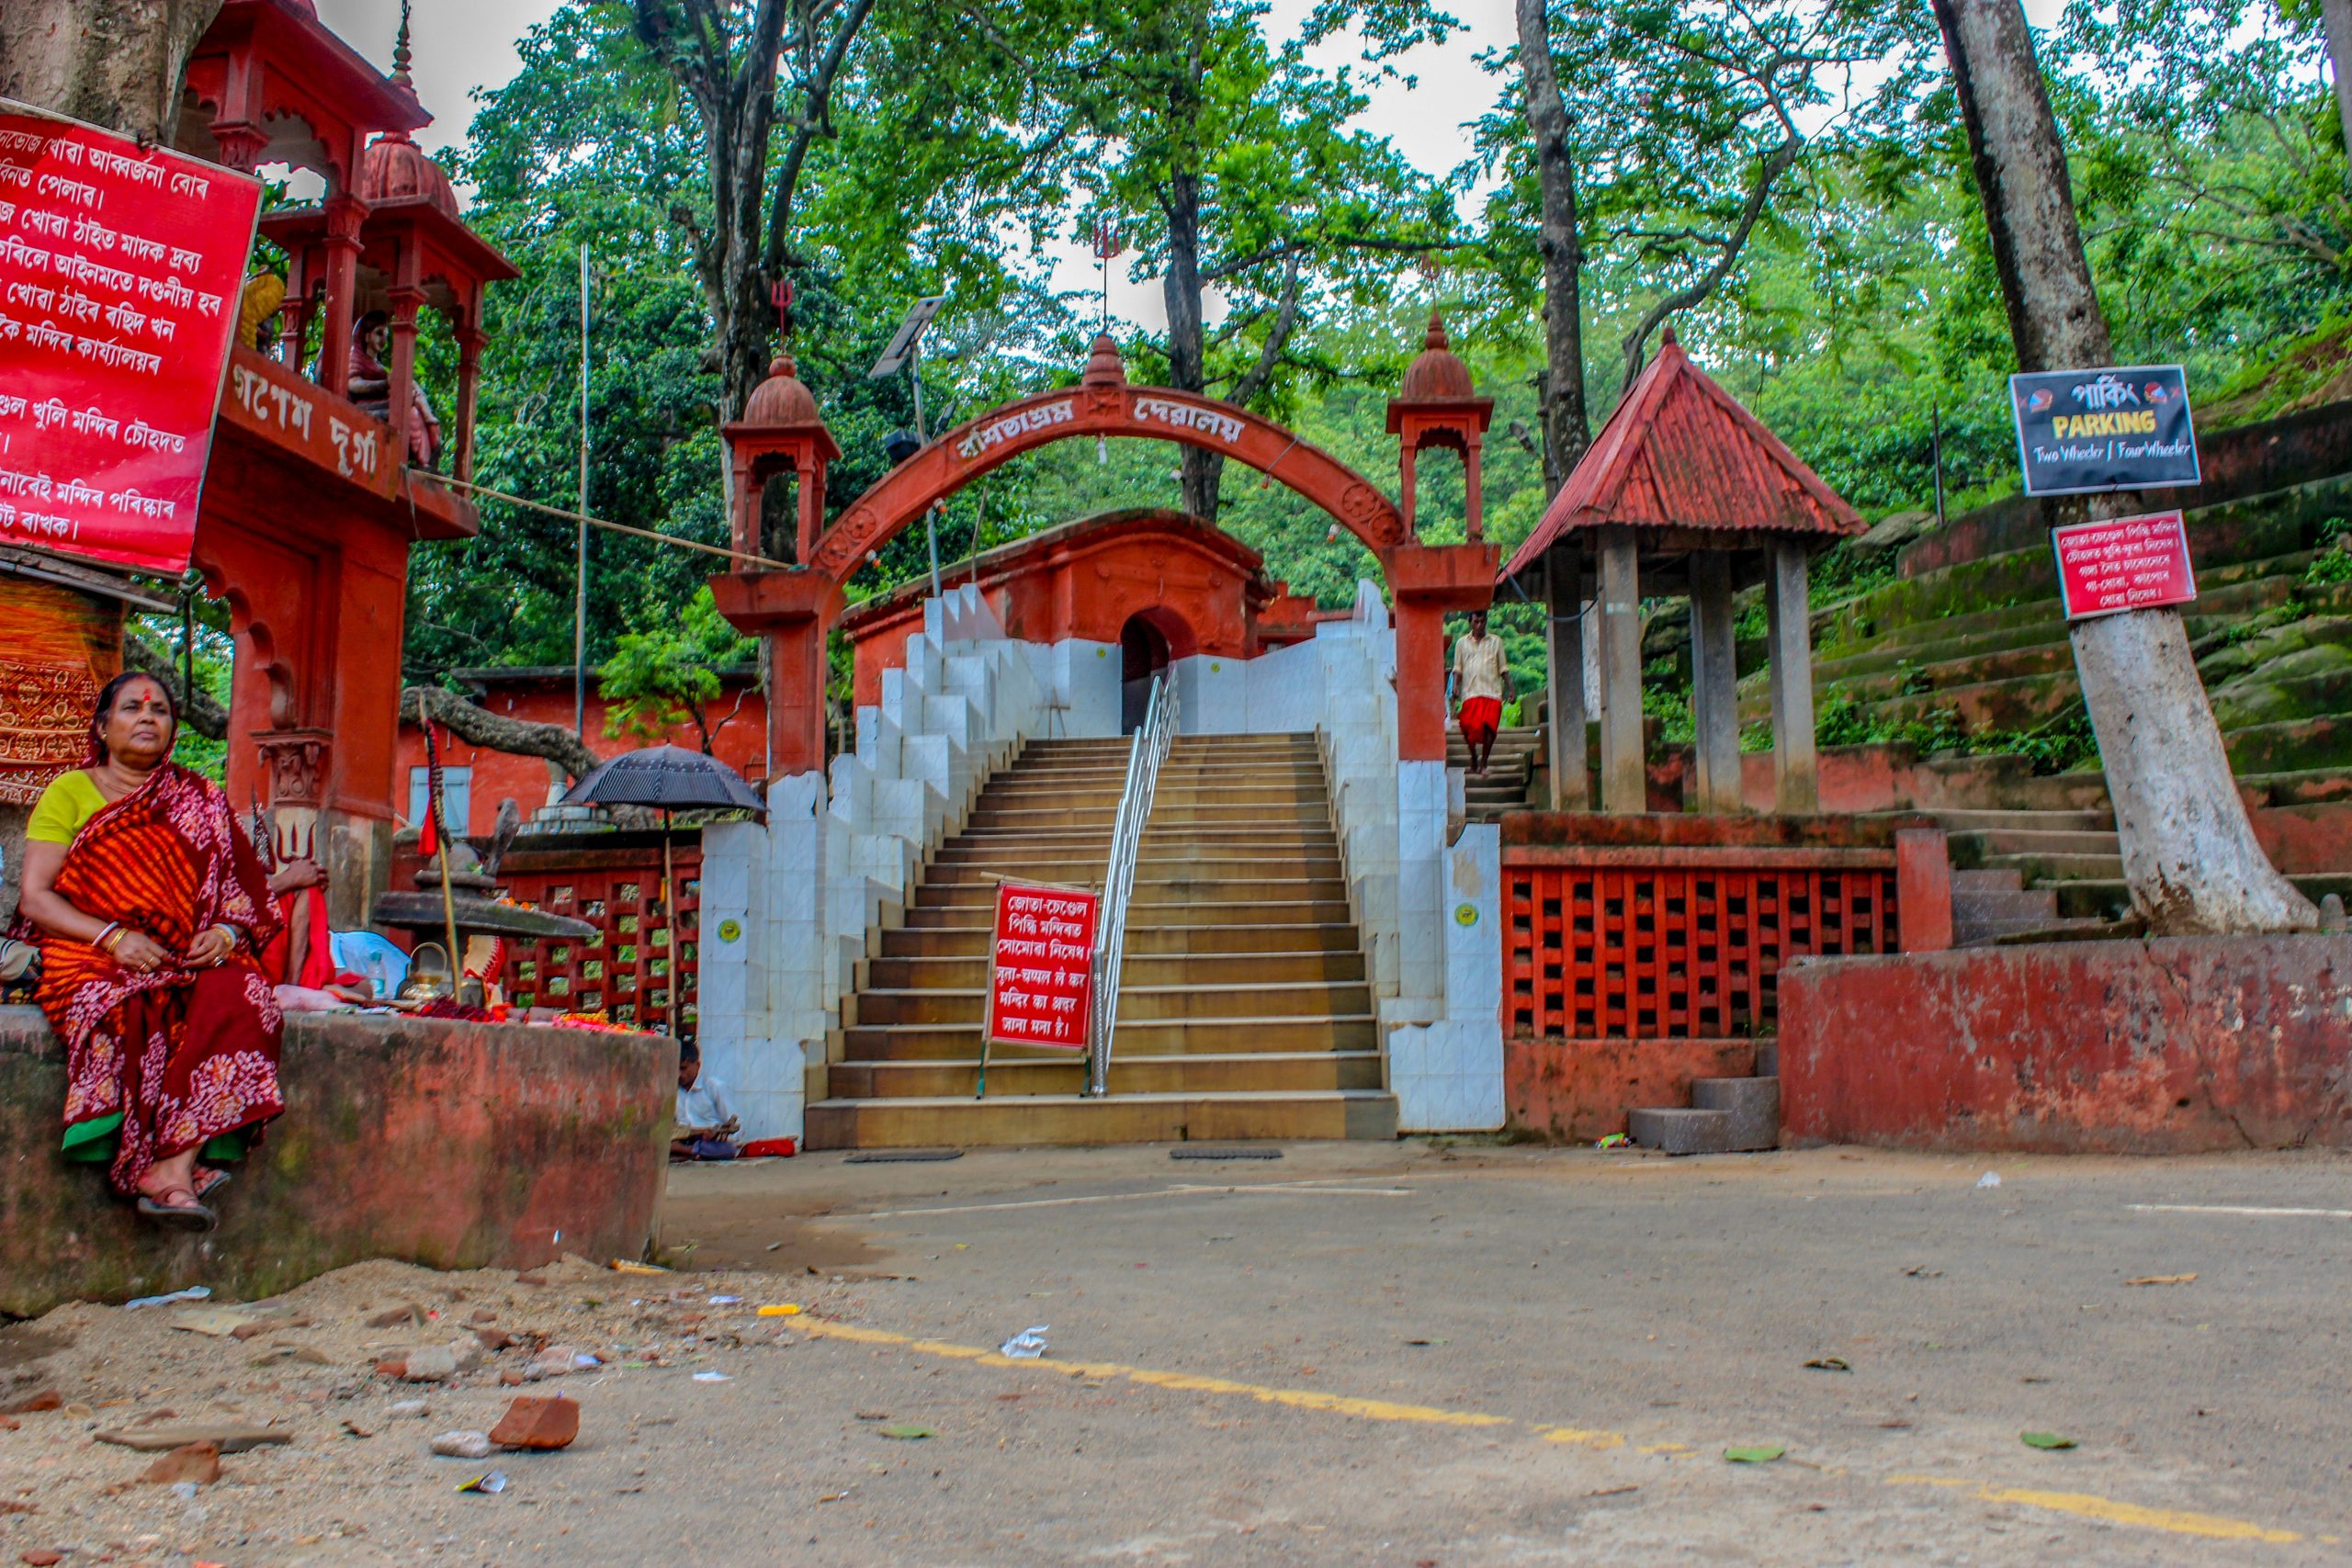 Basistha Temple in Guwahati